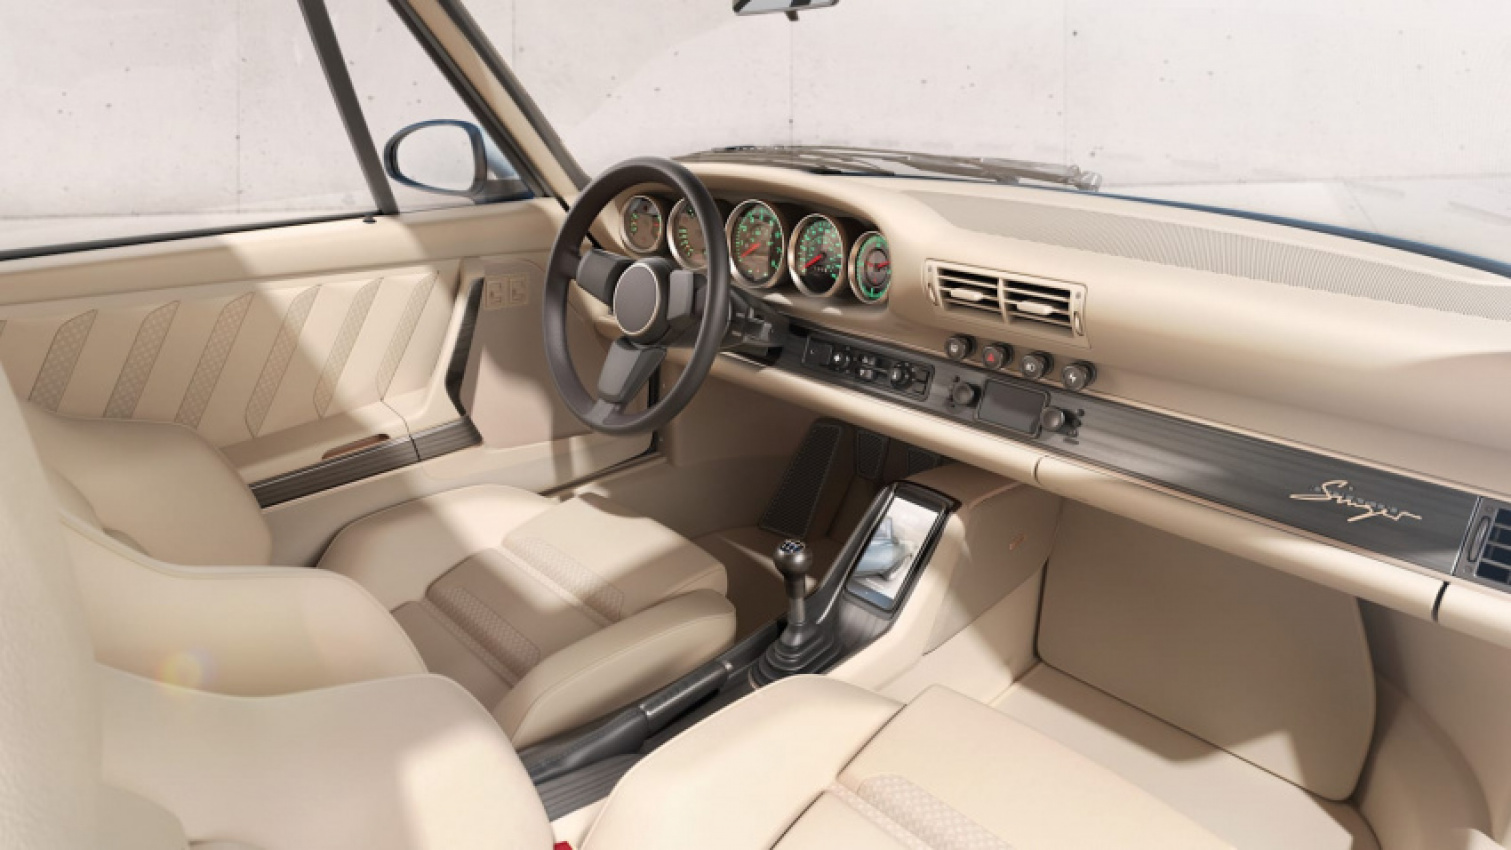 autos, cars, porsche, classics, coupe, design/style, luxury, performance, singer reveals turbo study as latest porsche 911 reimagining